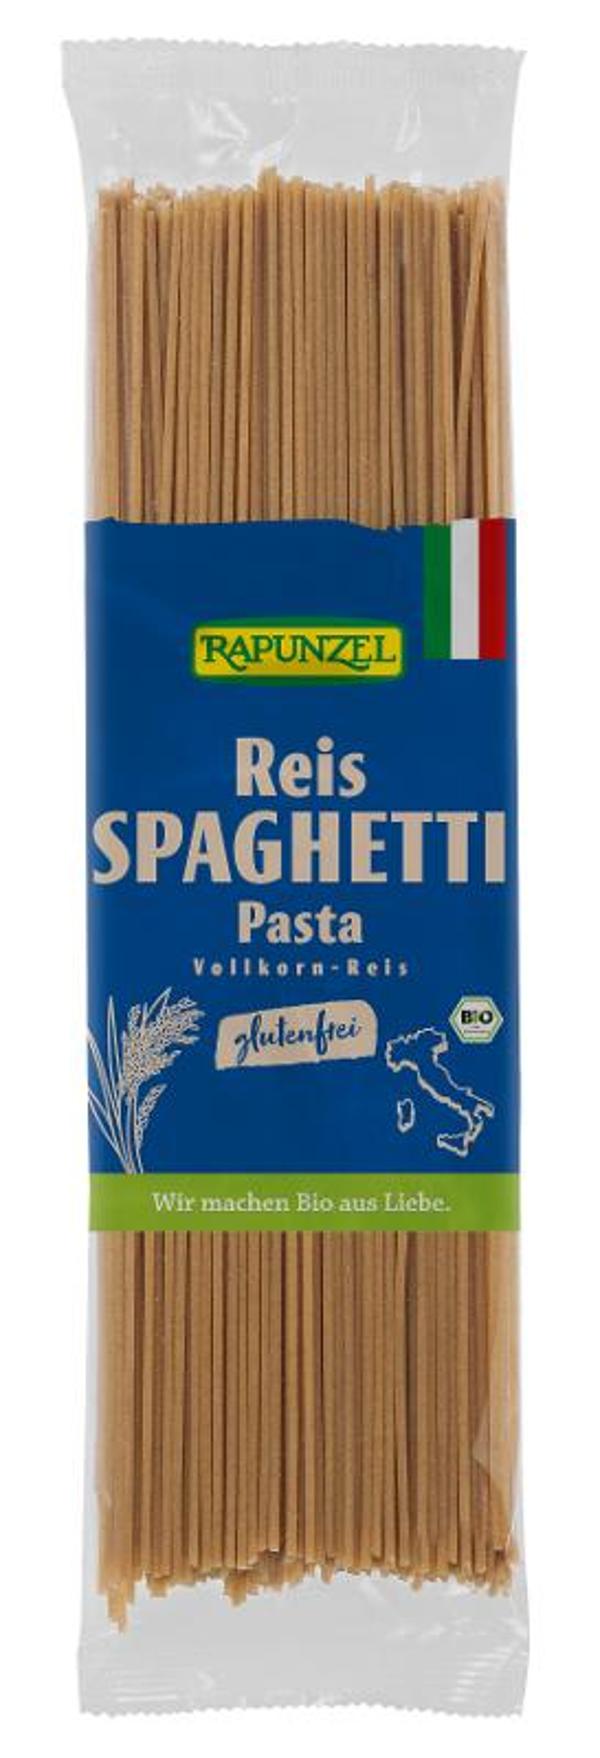 Produktfoto zu Reis-Spaghetti 250g